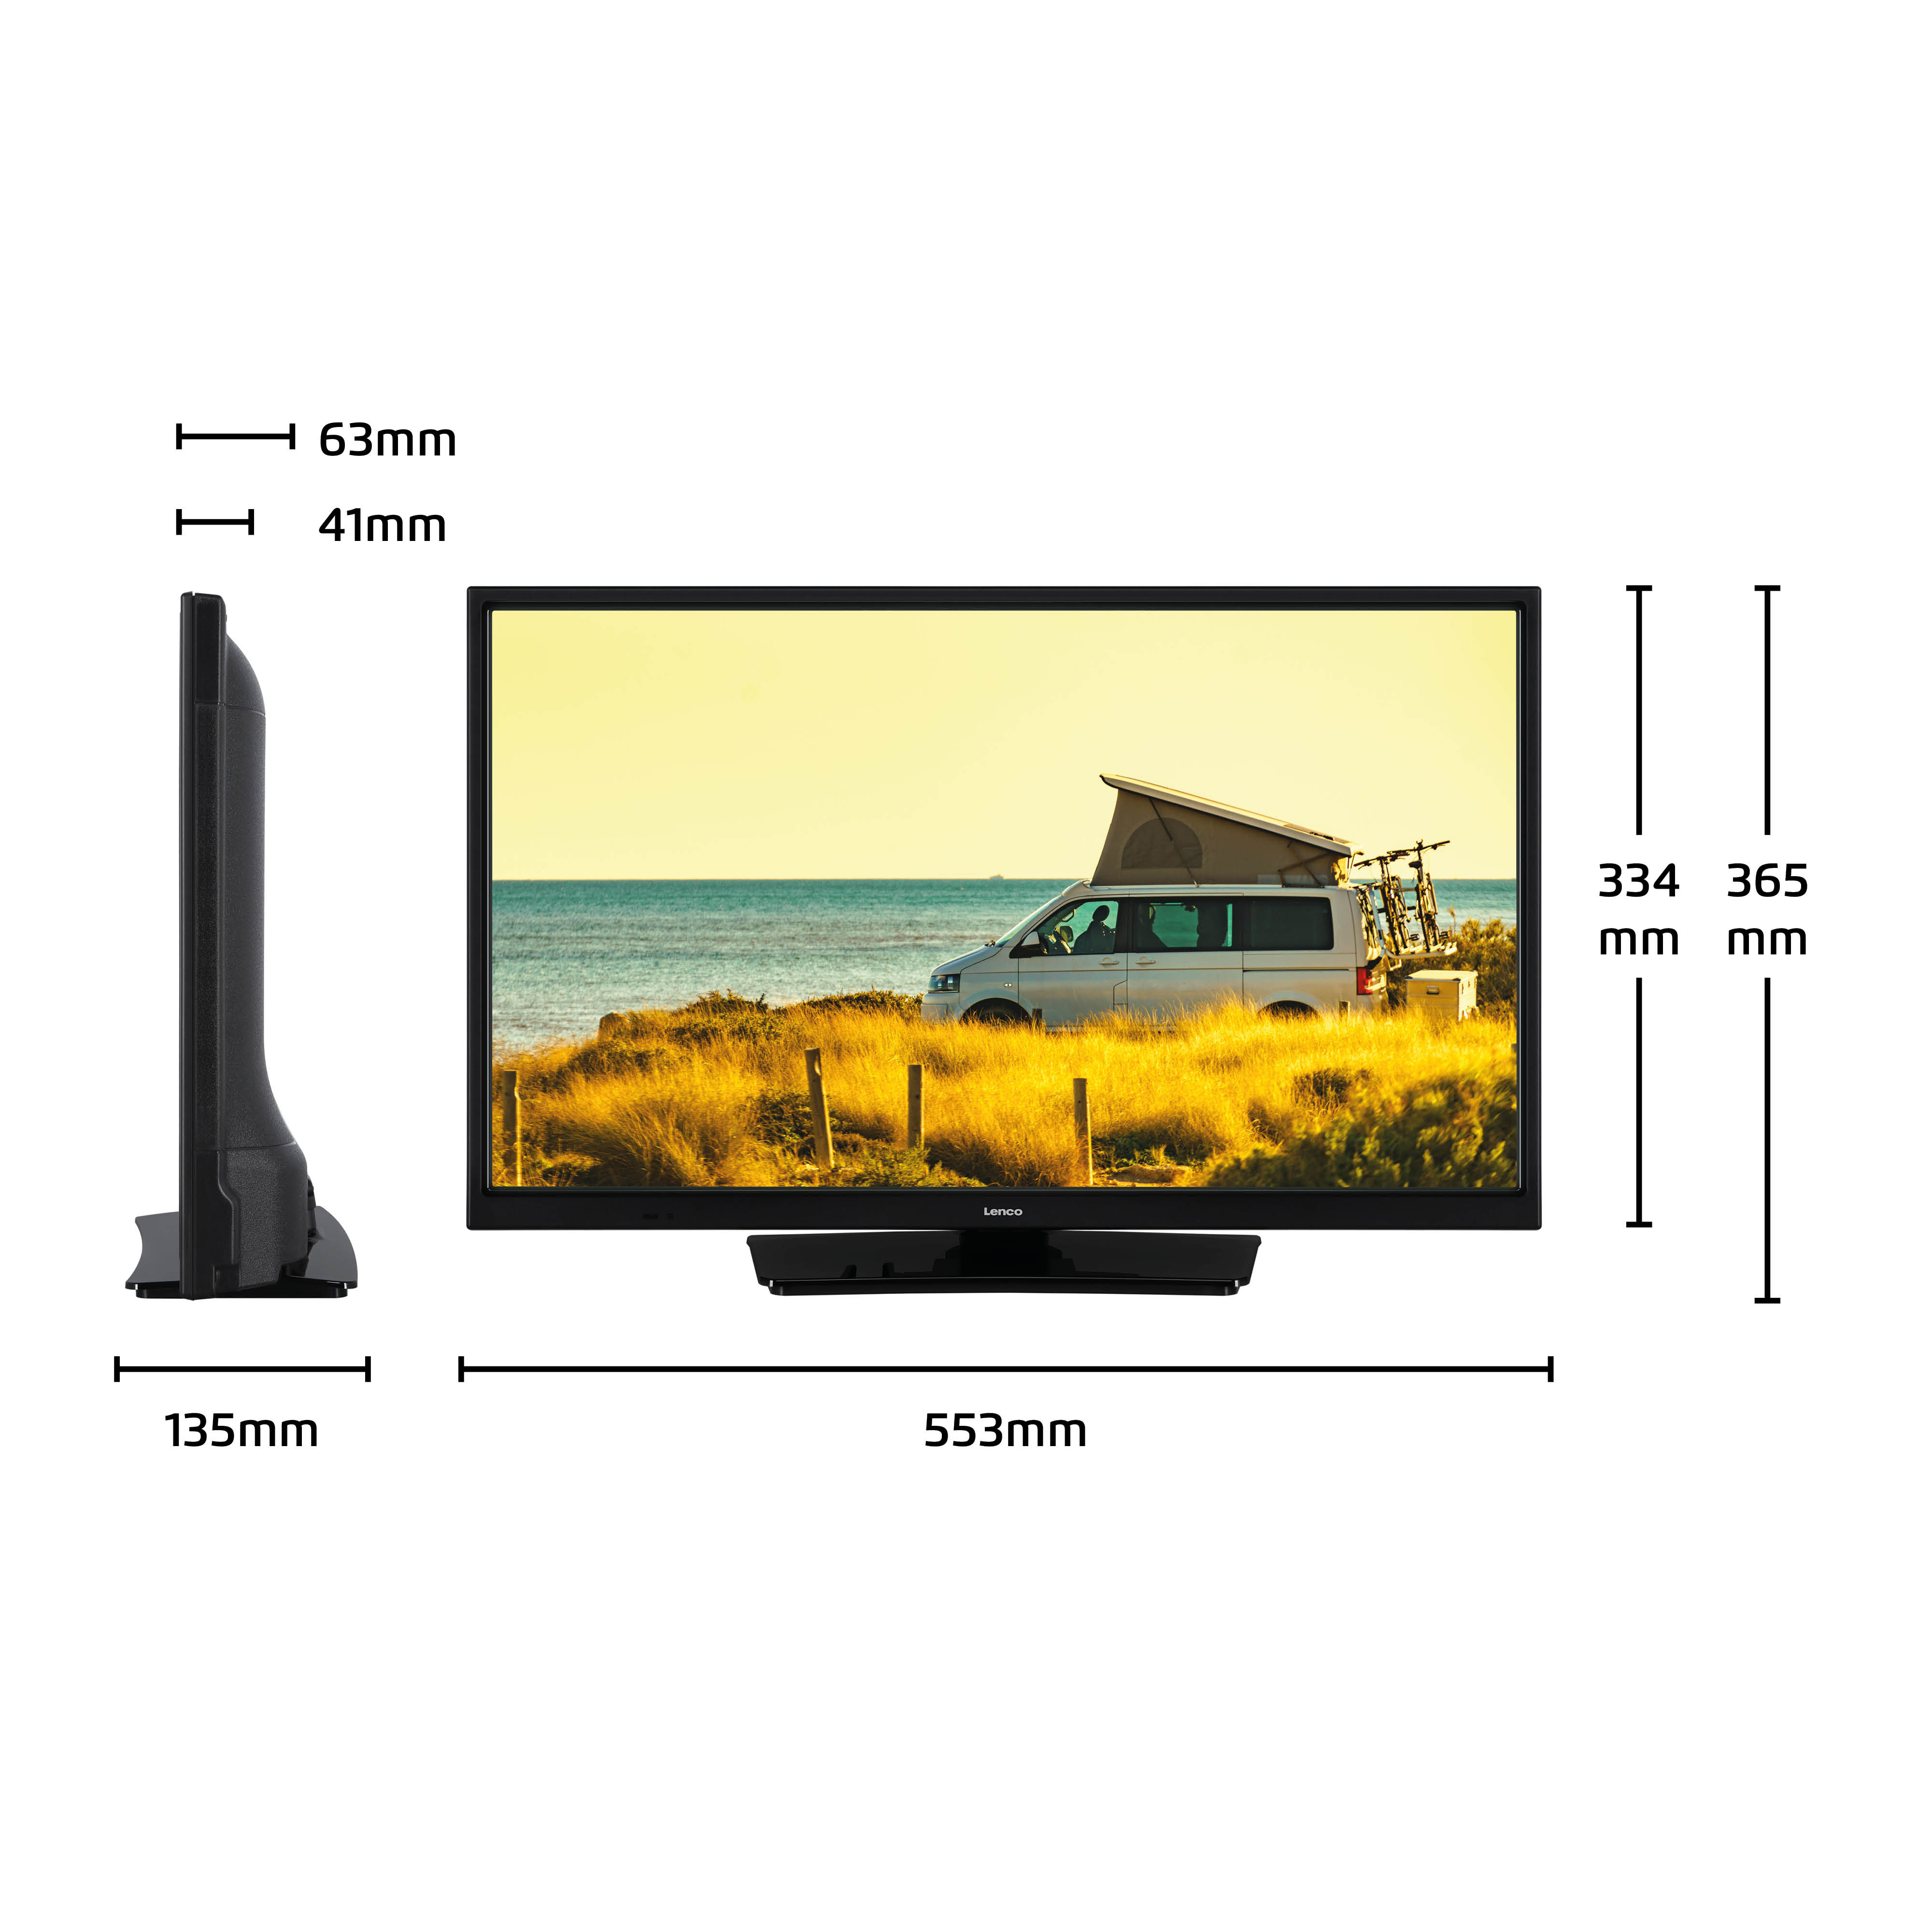 HD, LED-2463BK - Android) / LENCO cm, LED Zoll 24 Fernseher - 61 TV Bluetooth (Flat, mit